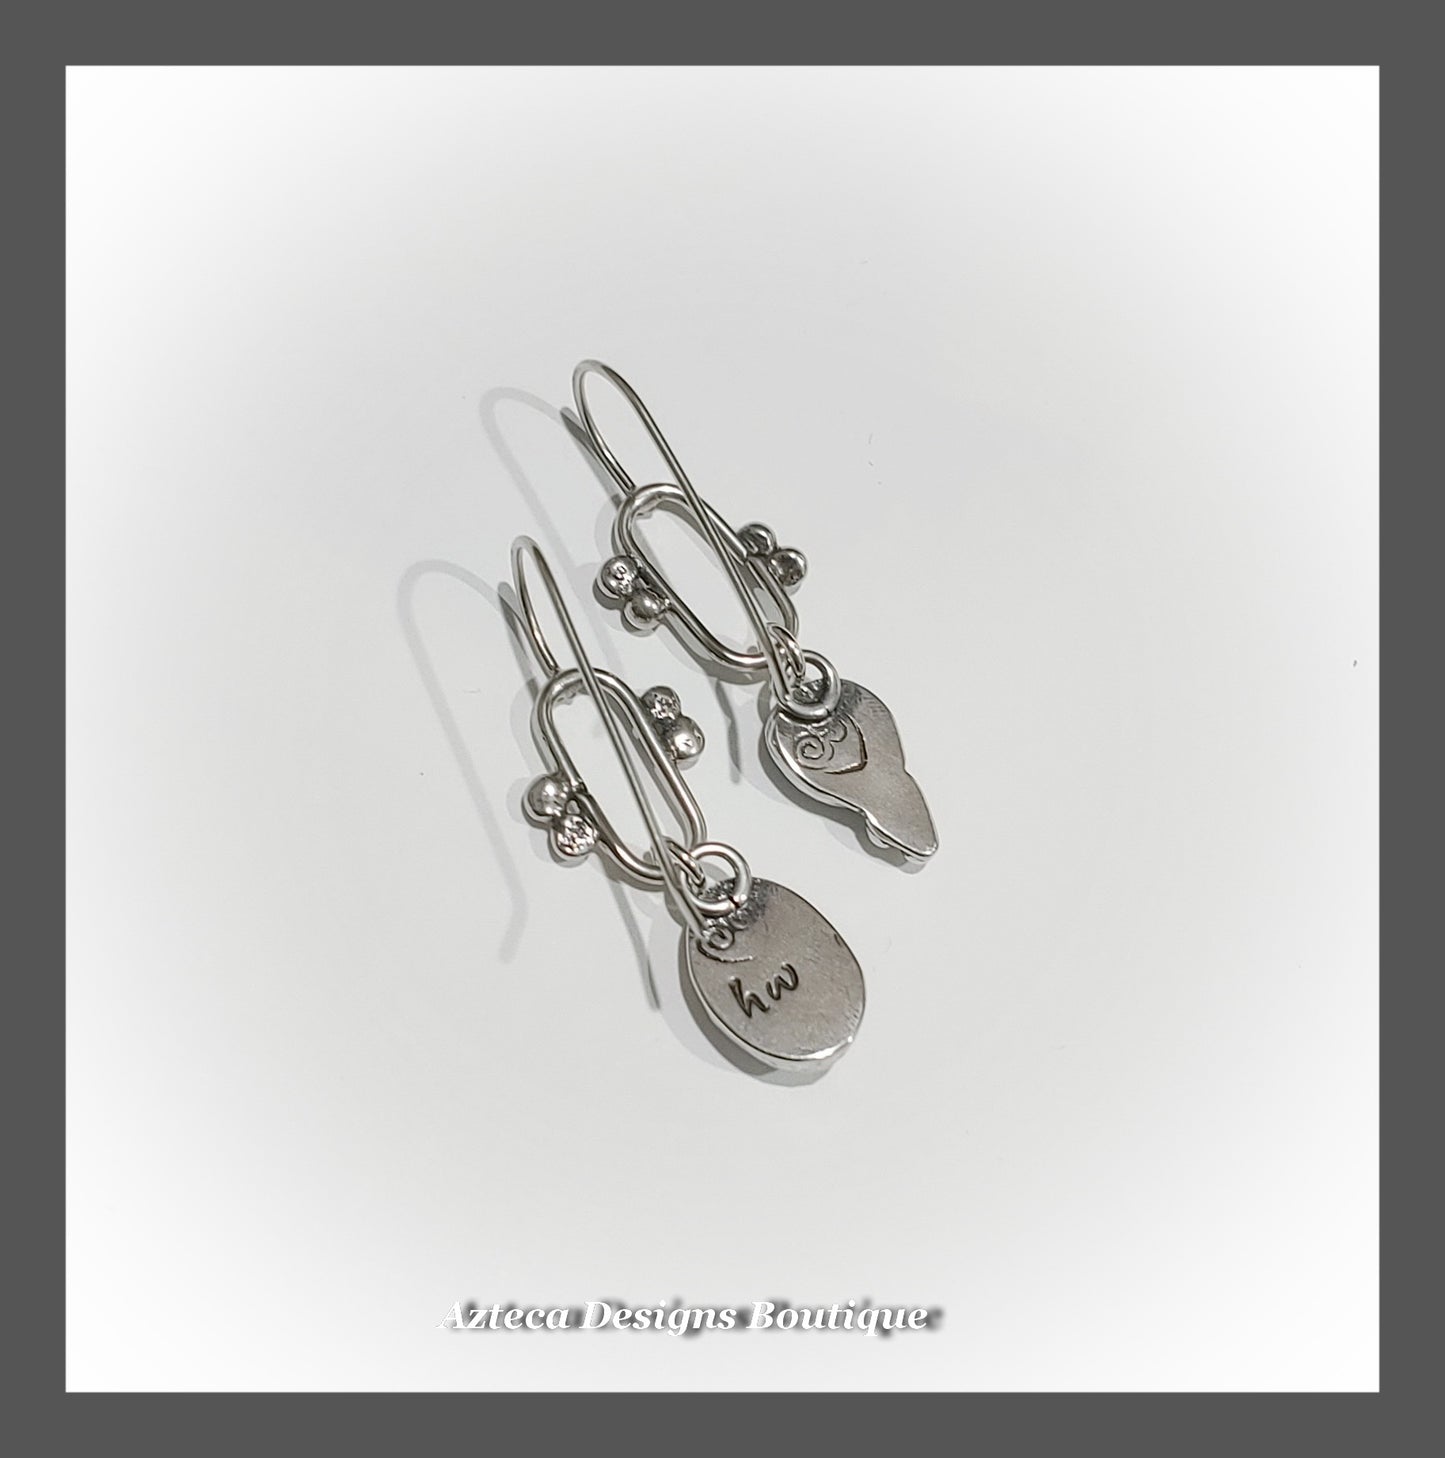 Aquamarine + Argentium Silver + Asymmetrical Hand Fabricated Earrings